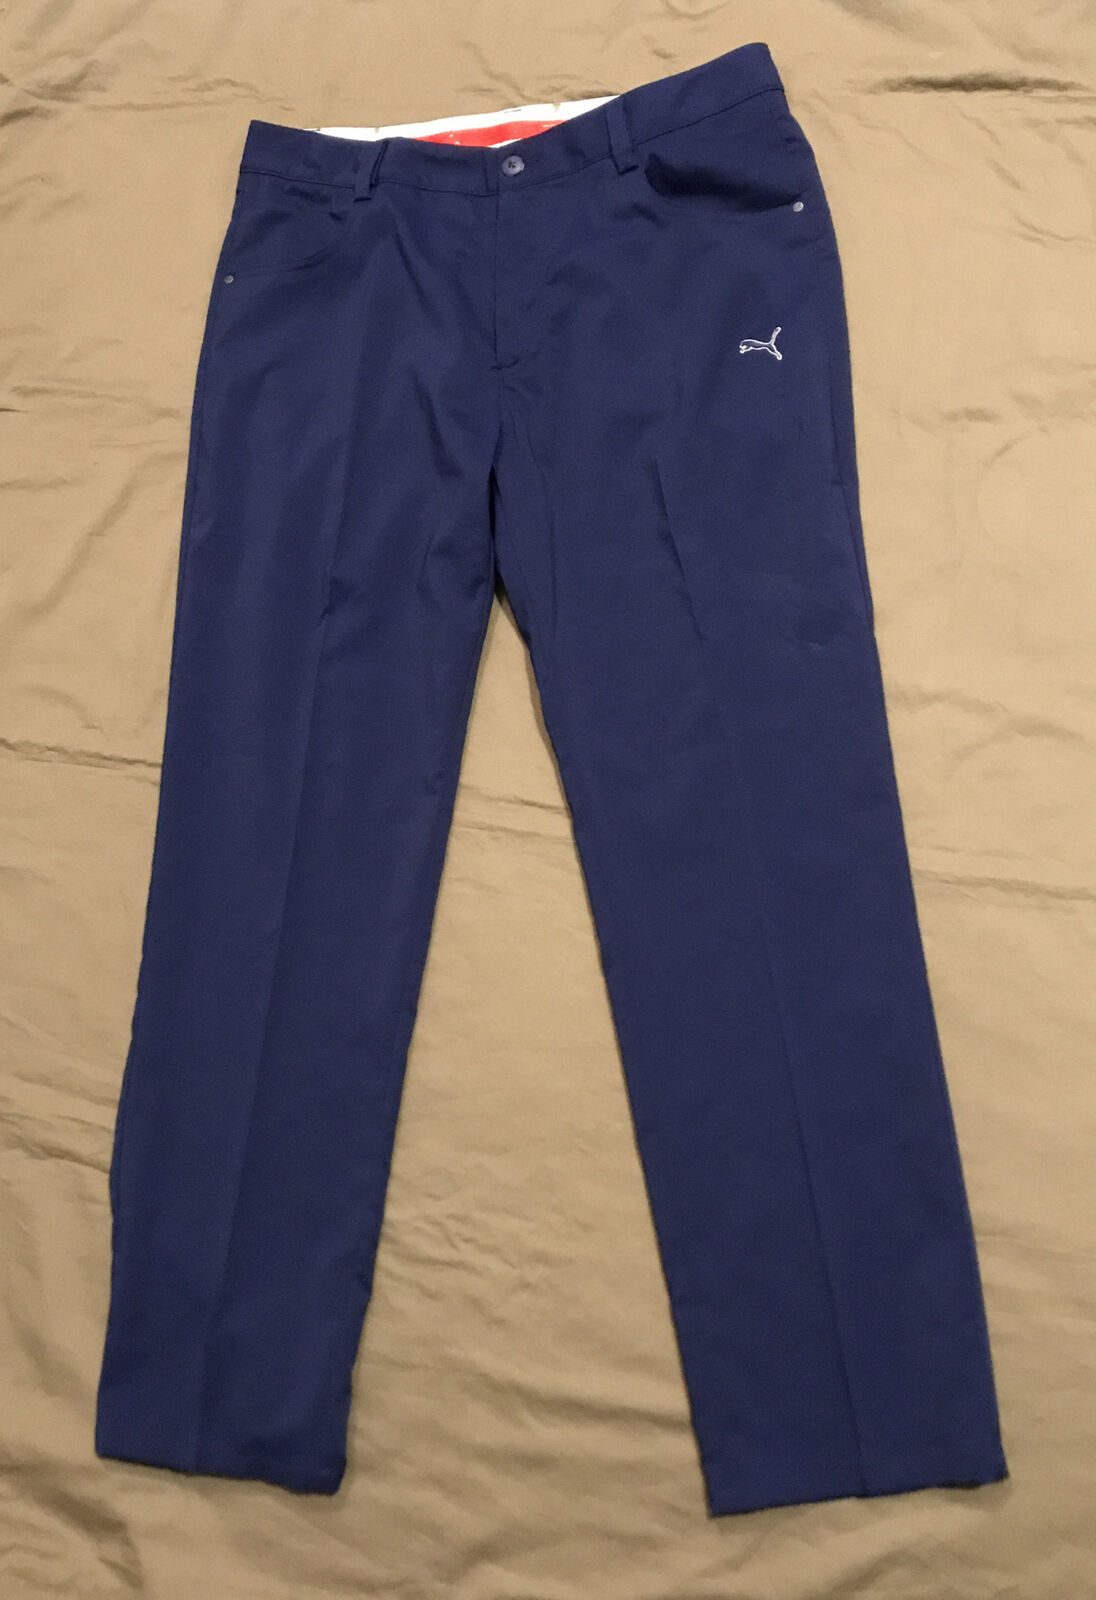 Puma Men’s Golf Pants Size 34x32 Cobra Blue